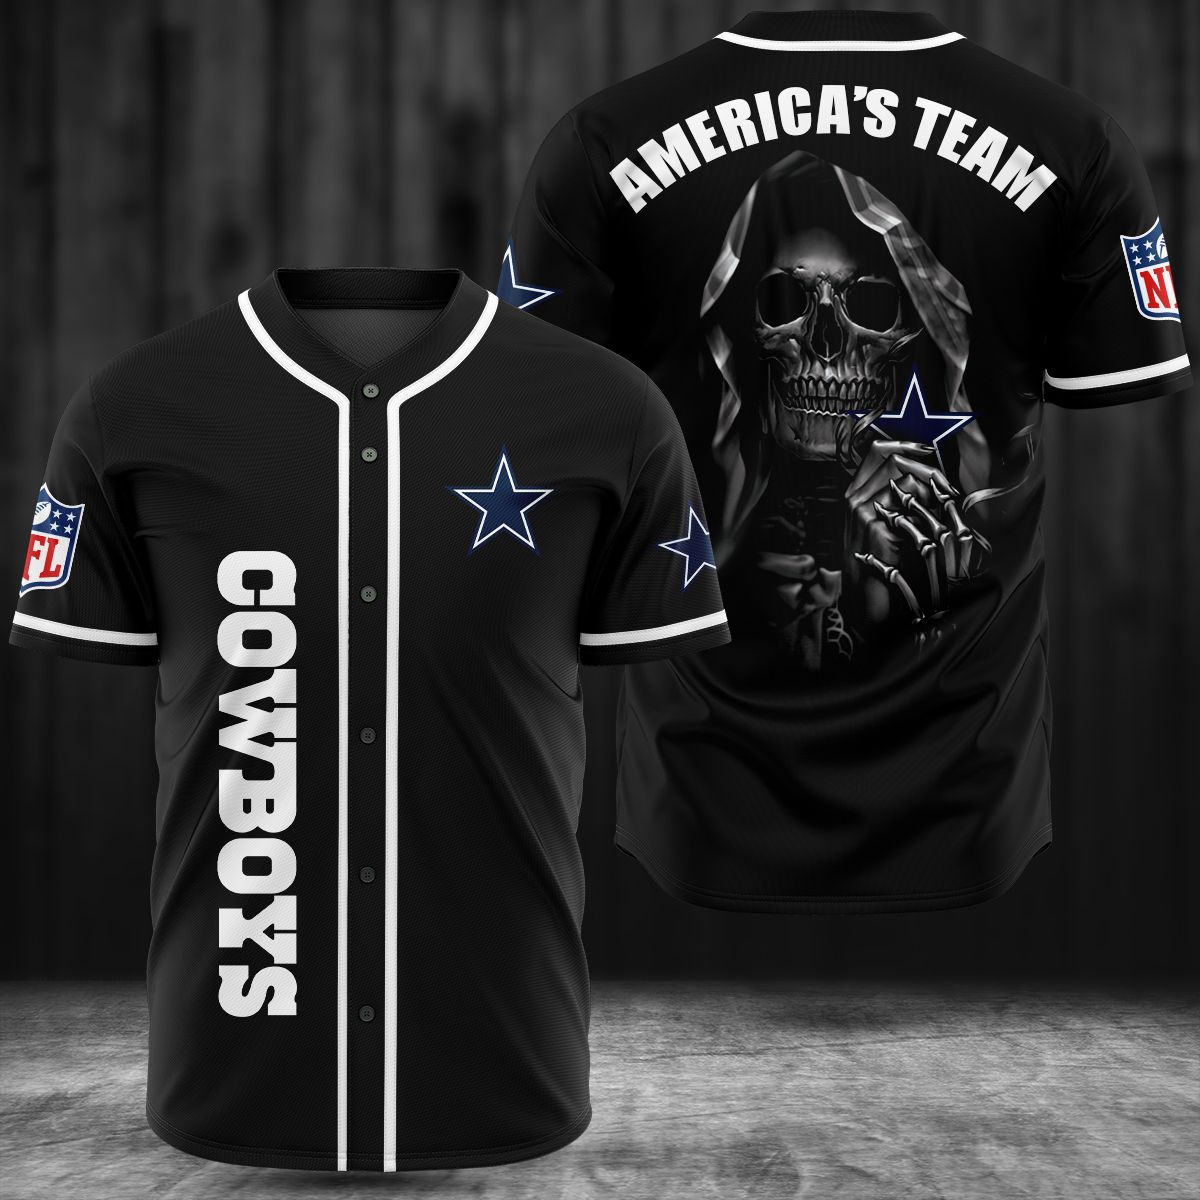 NFL Dallas Cowboys America's team baseball jersey shirt